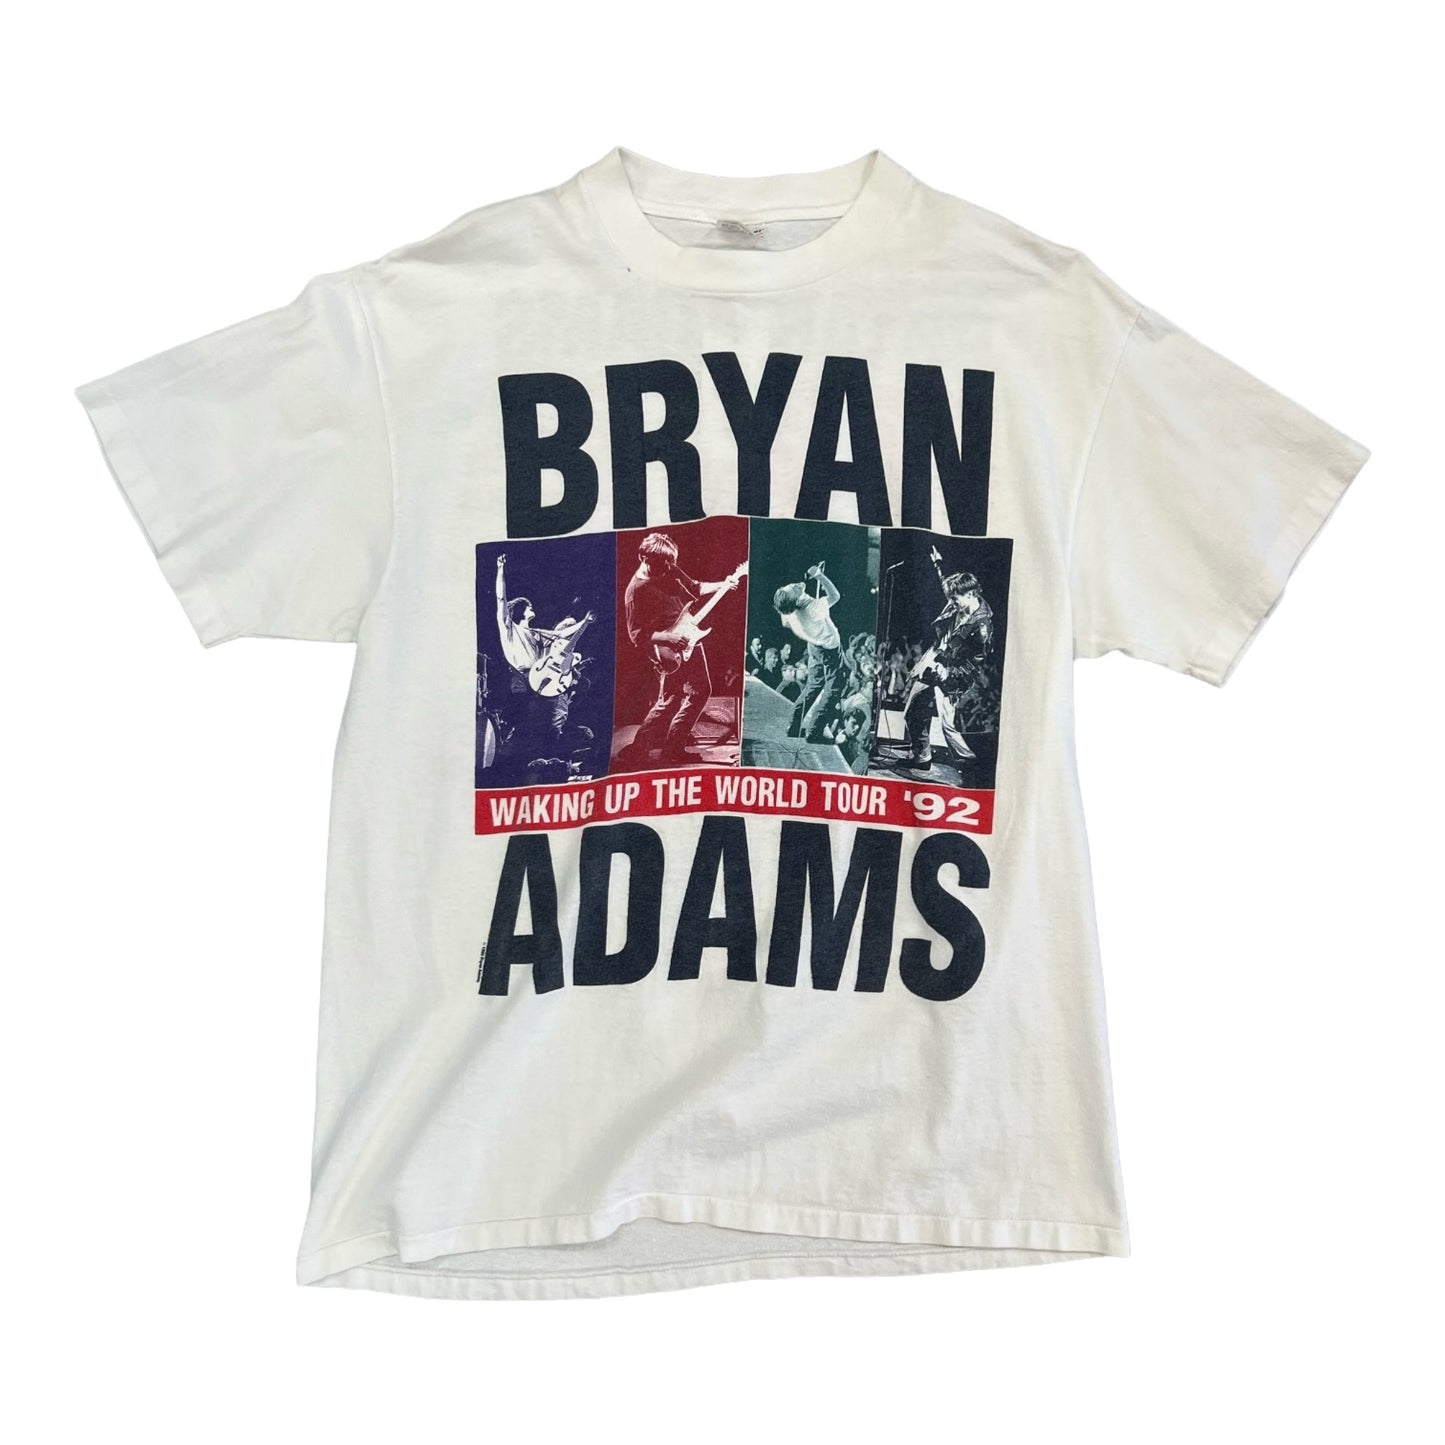 1992 Bryan Adams "Waking up the world tour tee"